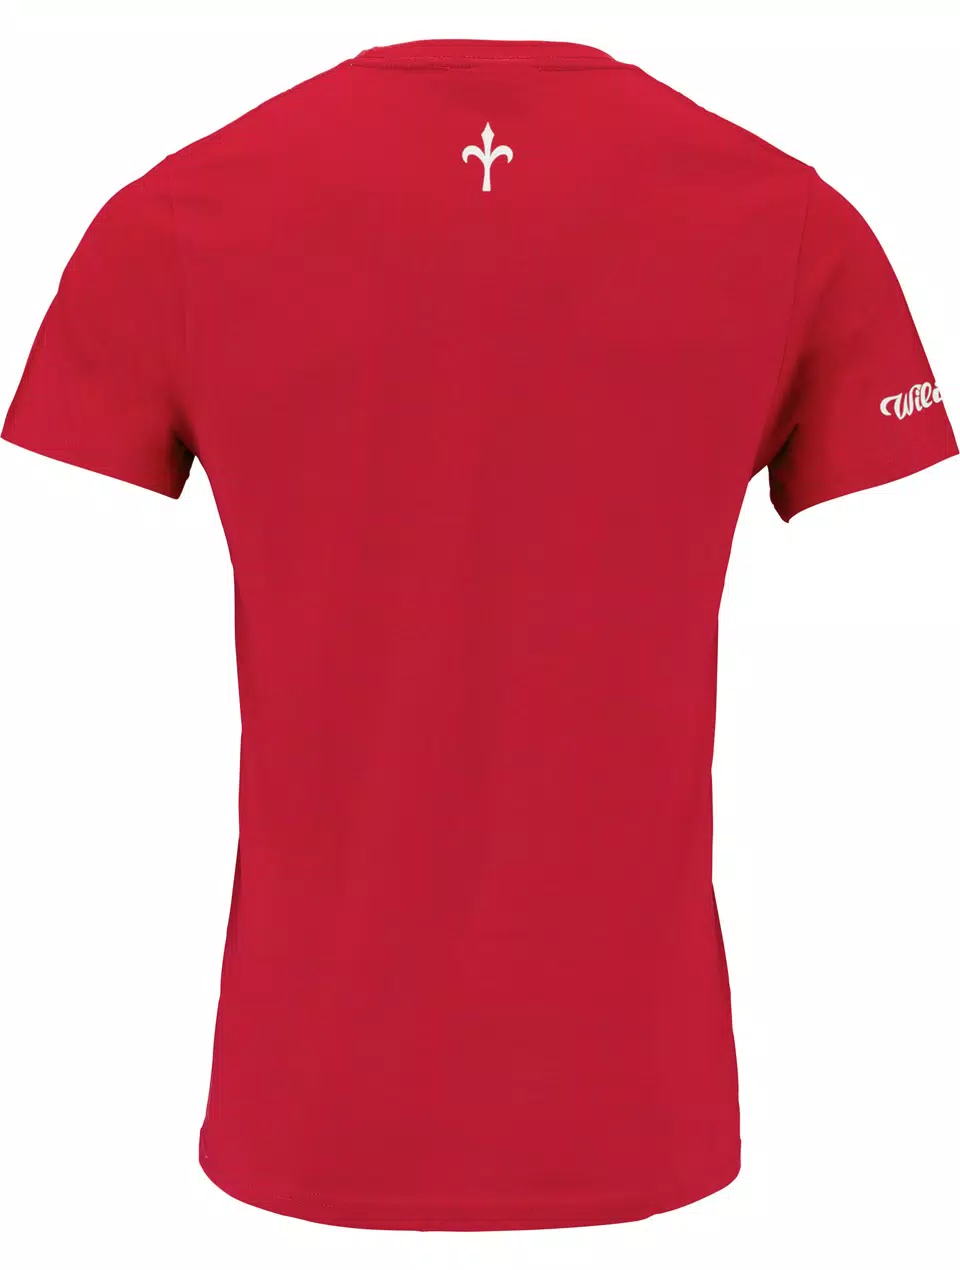 #Raisethebar T-Shirt rouge